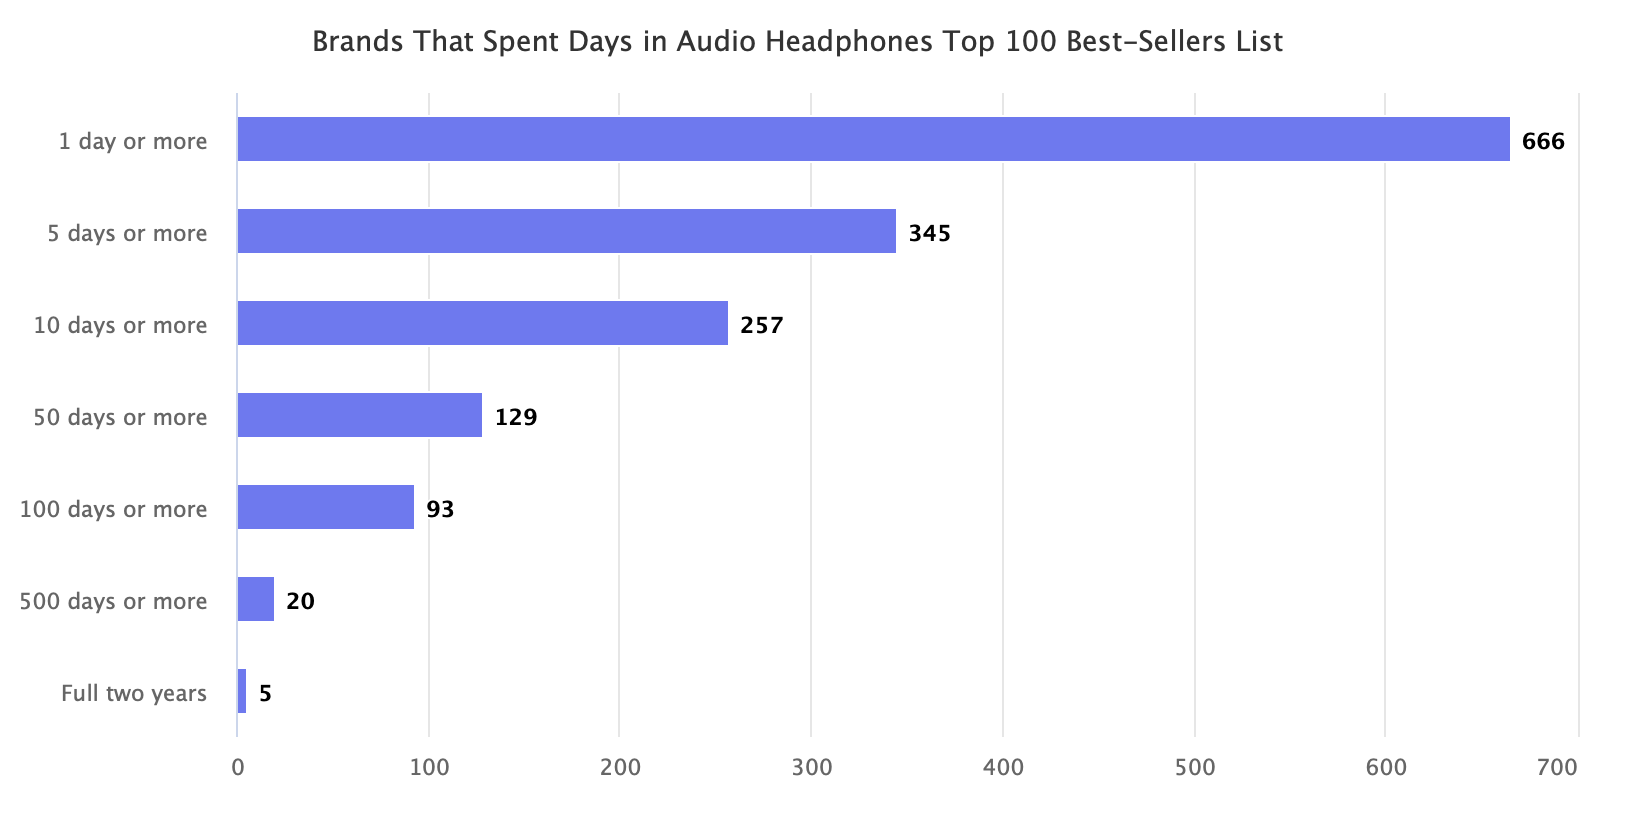 Brands That Spent Days in Audio Headphones Top 100 Best-Sellers List